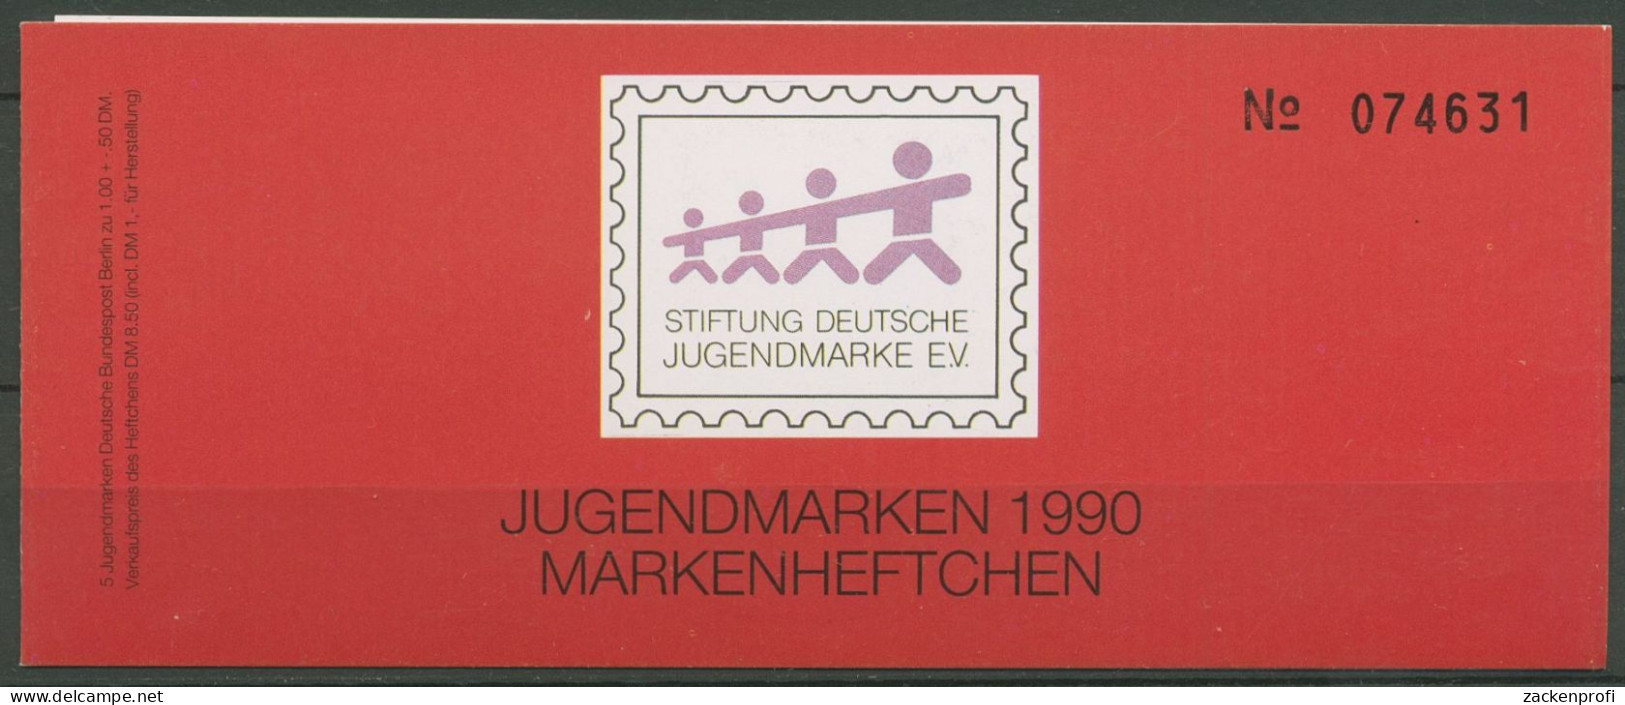 Berlin Jugendmarke 1990 Max & Moritz Markenheftchen 871 MH Postfrisch (C60184) - Carnets